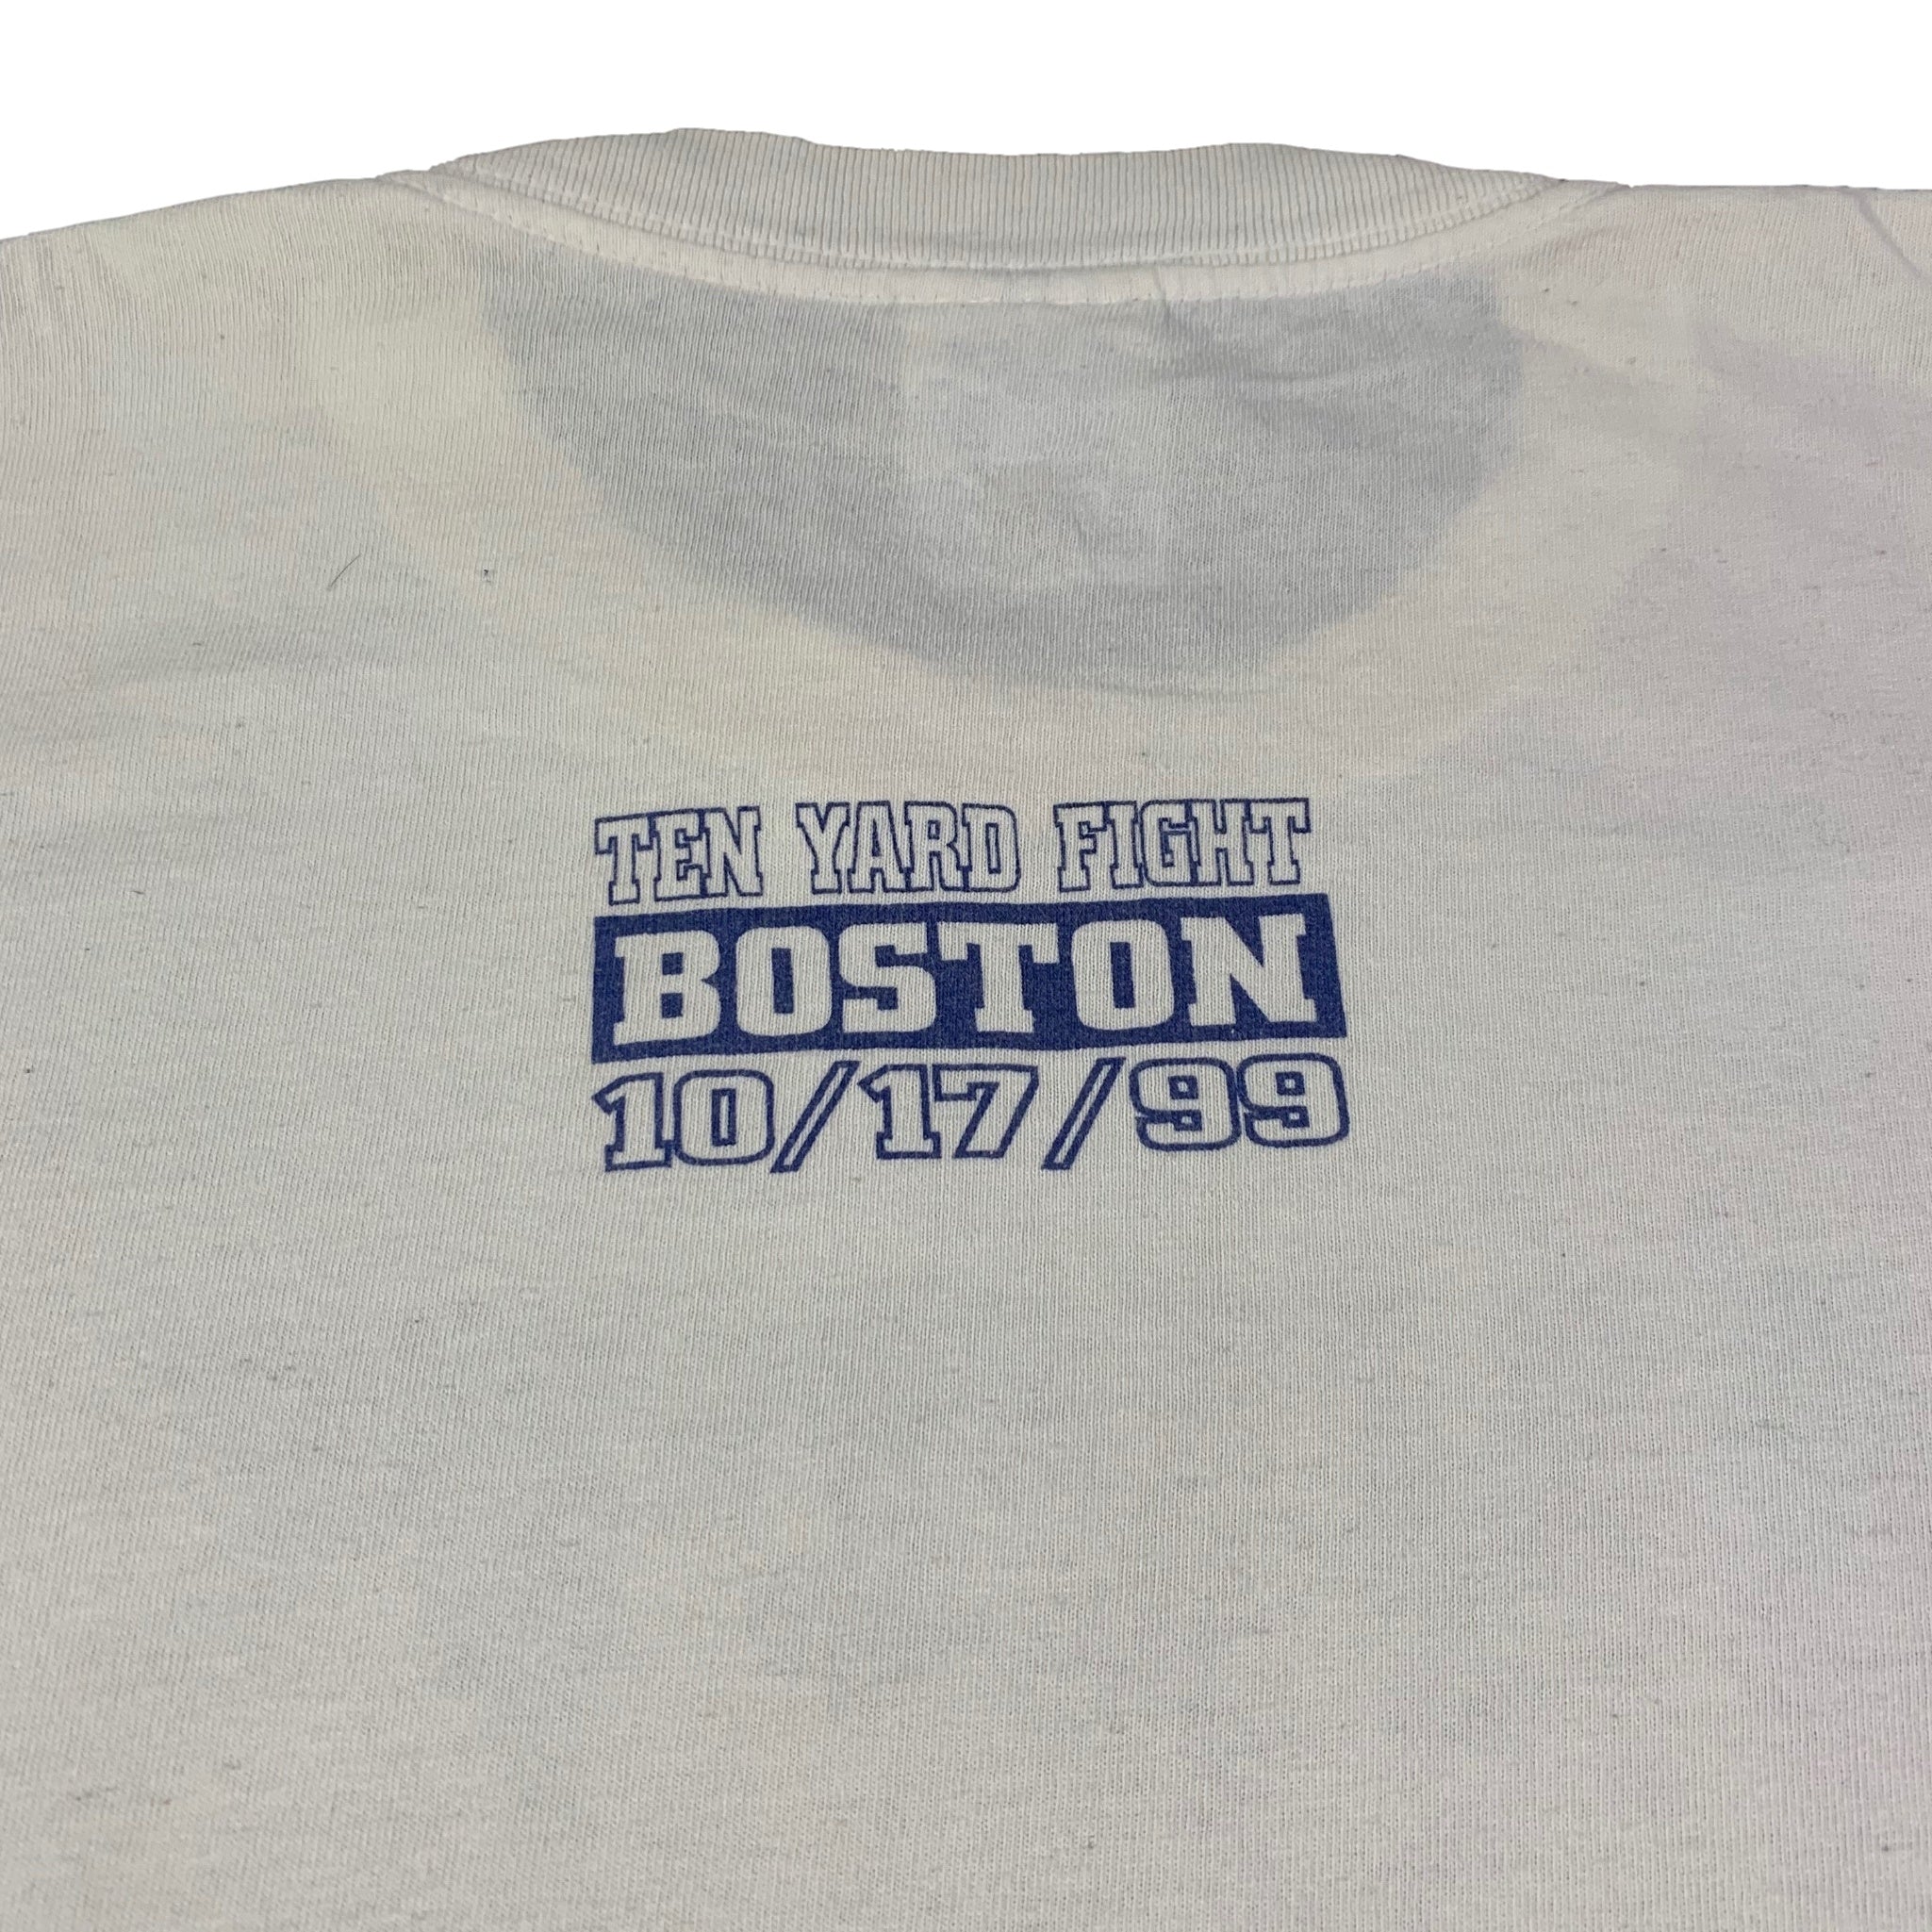  Vintage Premium Yankees Suck T-shirt Sweatshirt